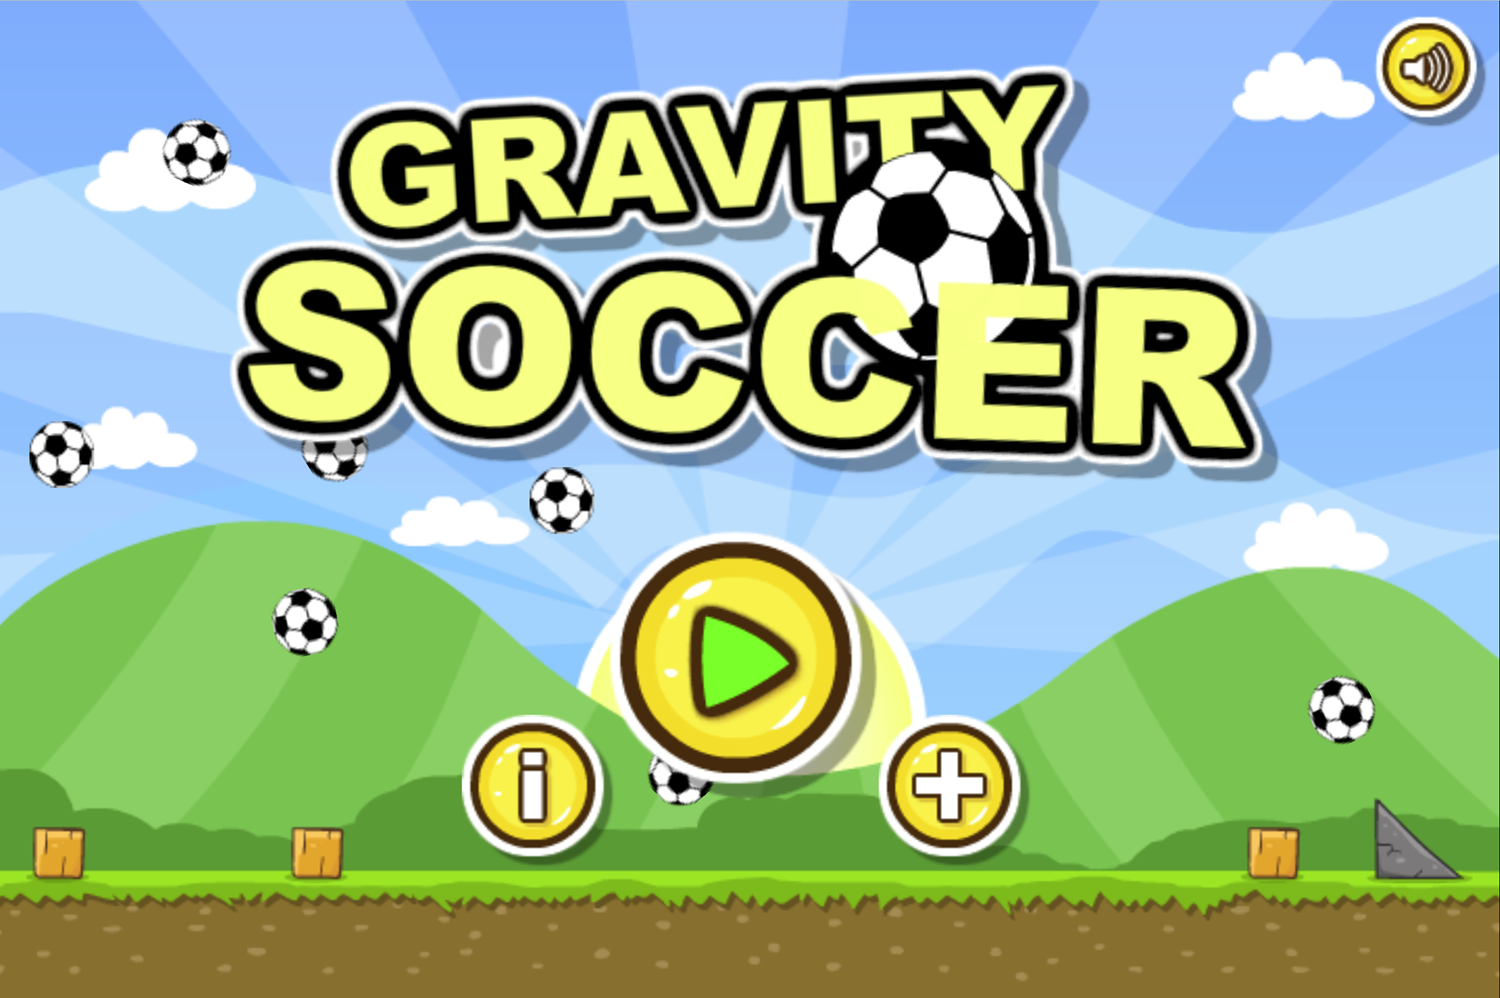 Gravity Soccer Game Welcome Screen Screenshot.